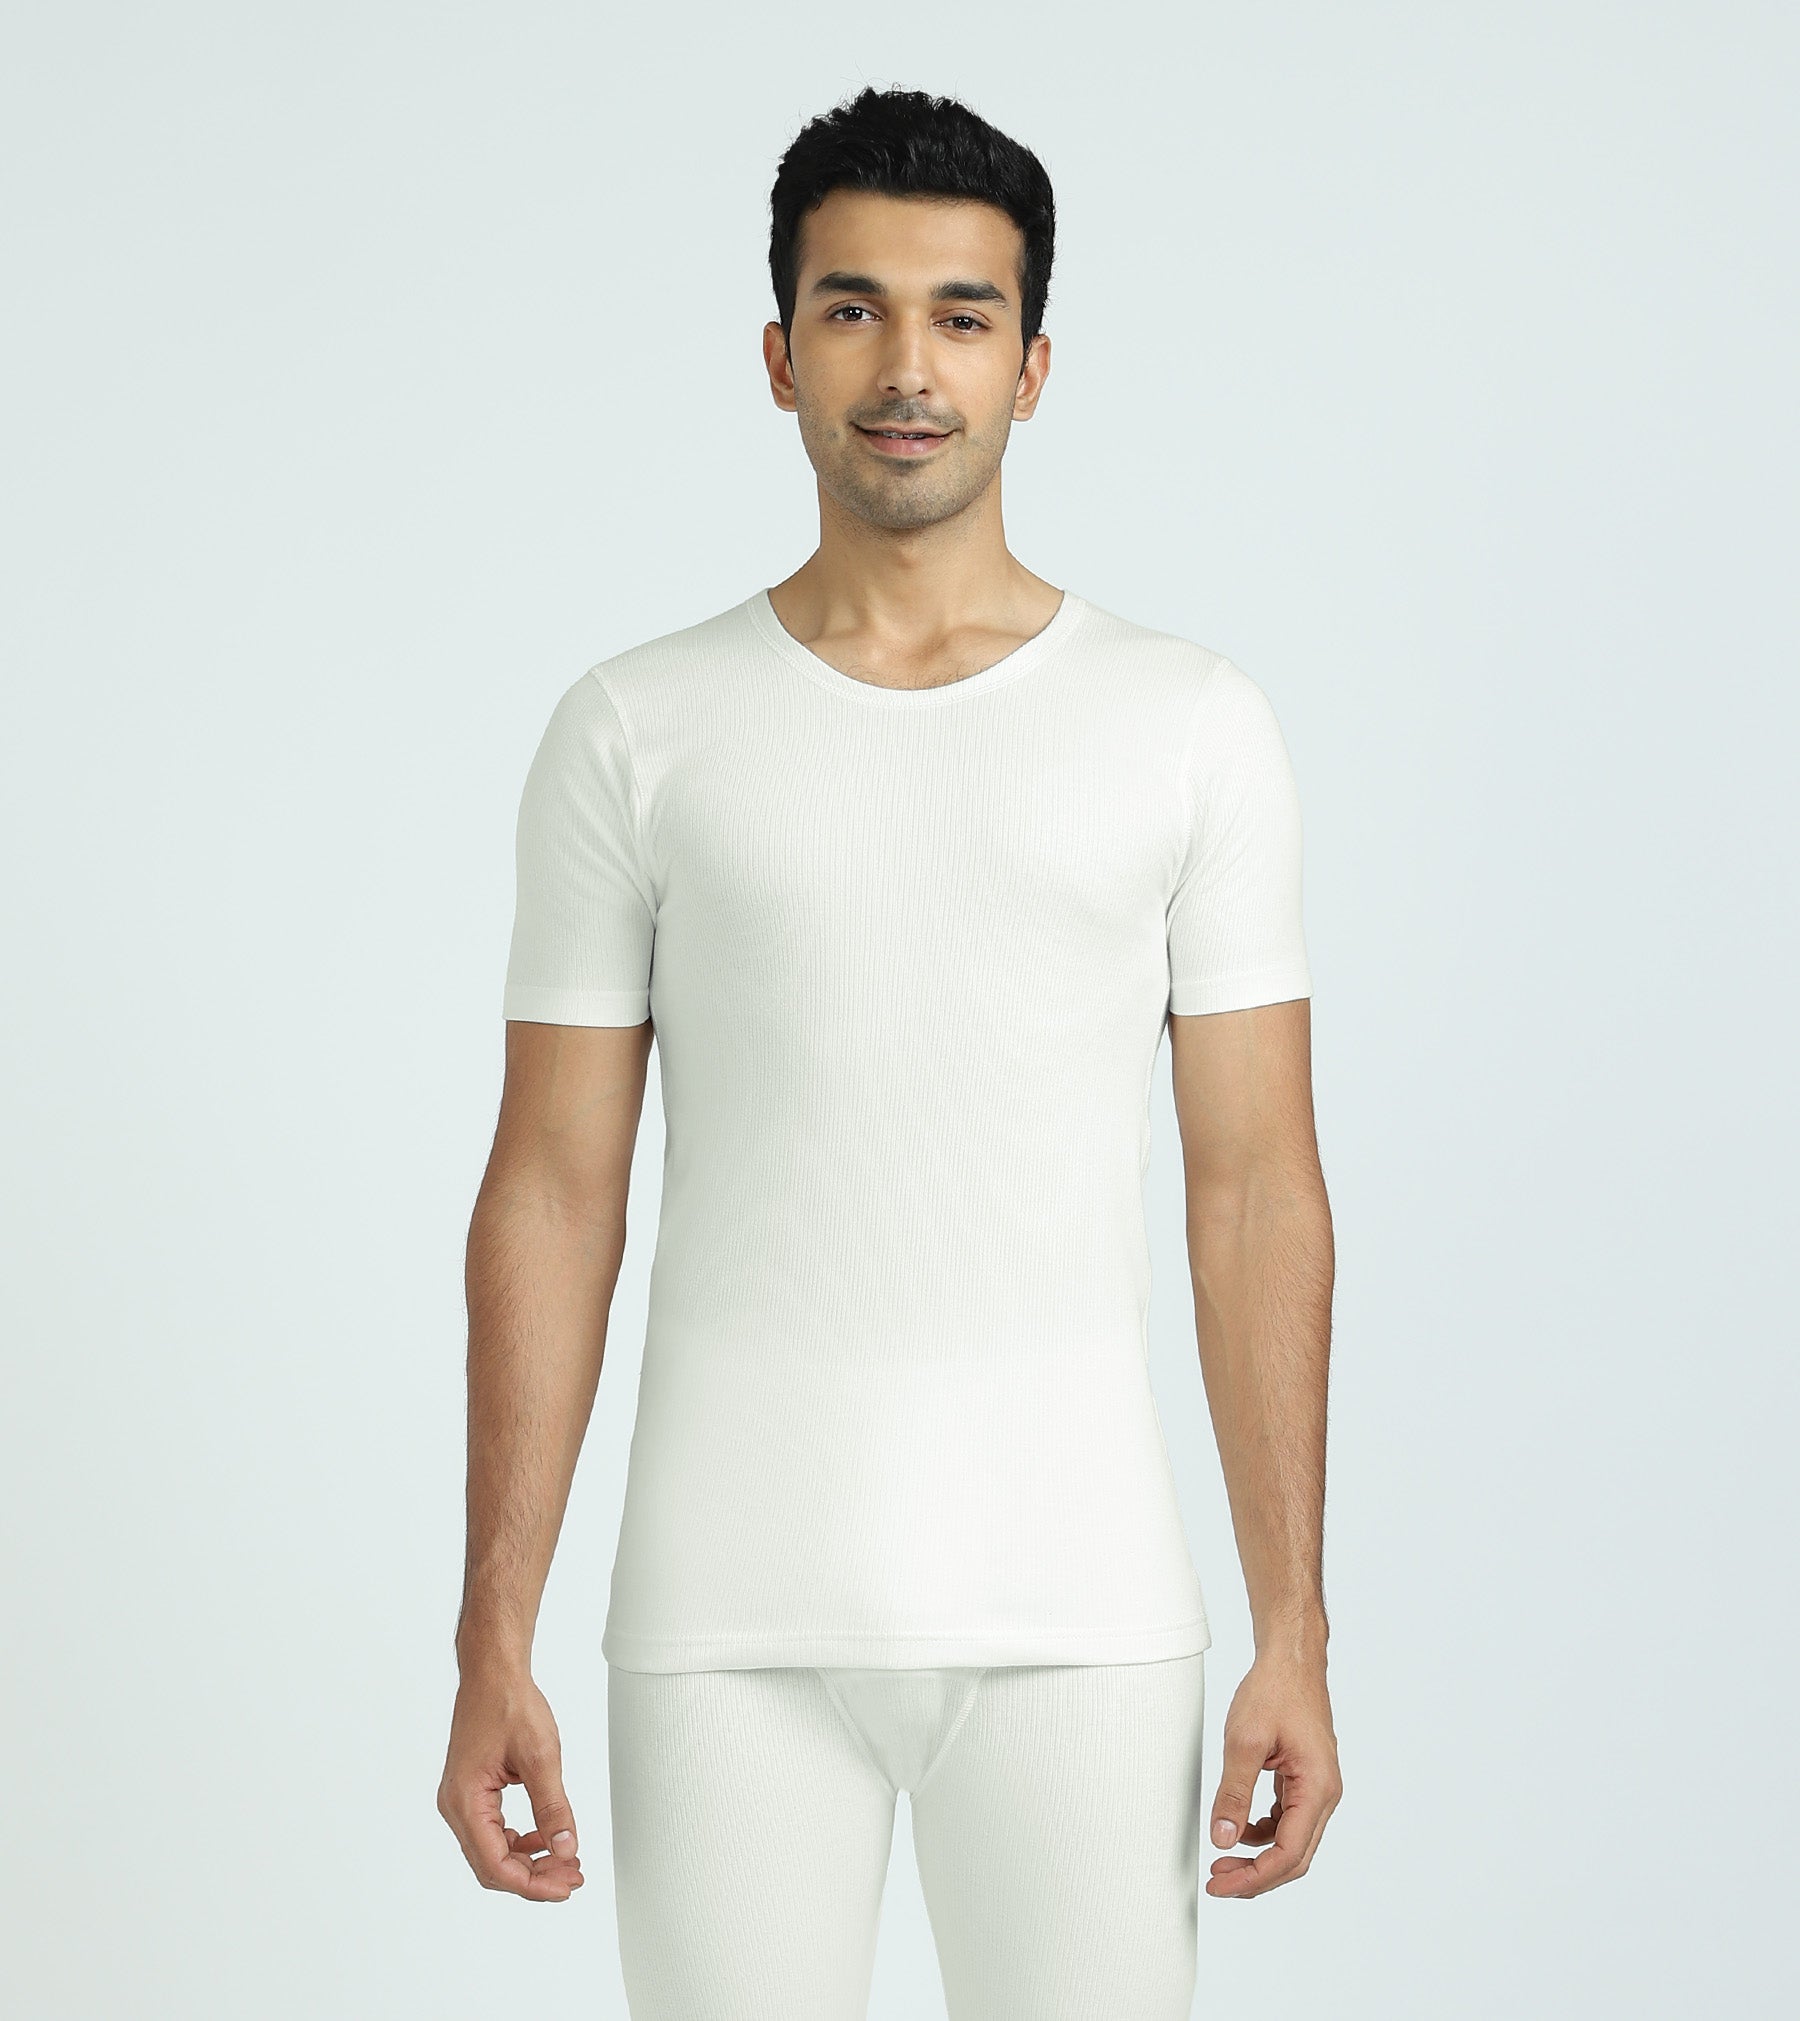 Buy Thermal Vest Innerwear For Men Online in India – XYXX Apparels